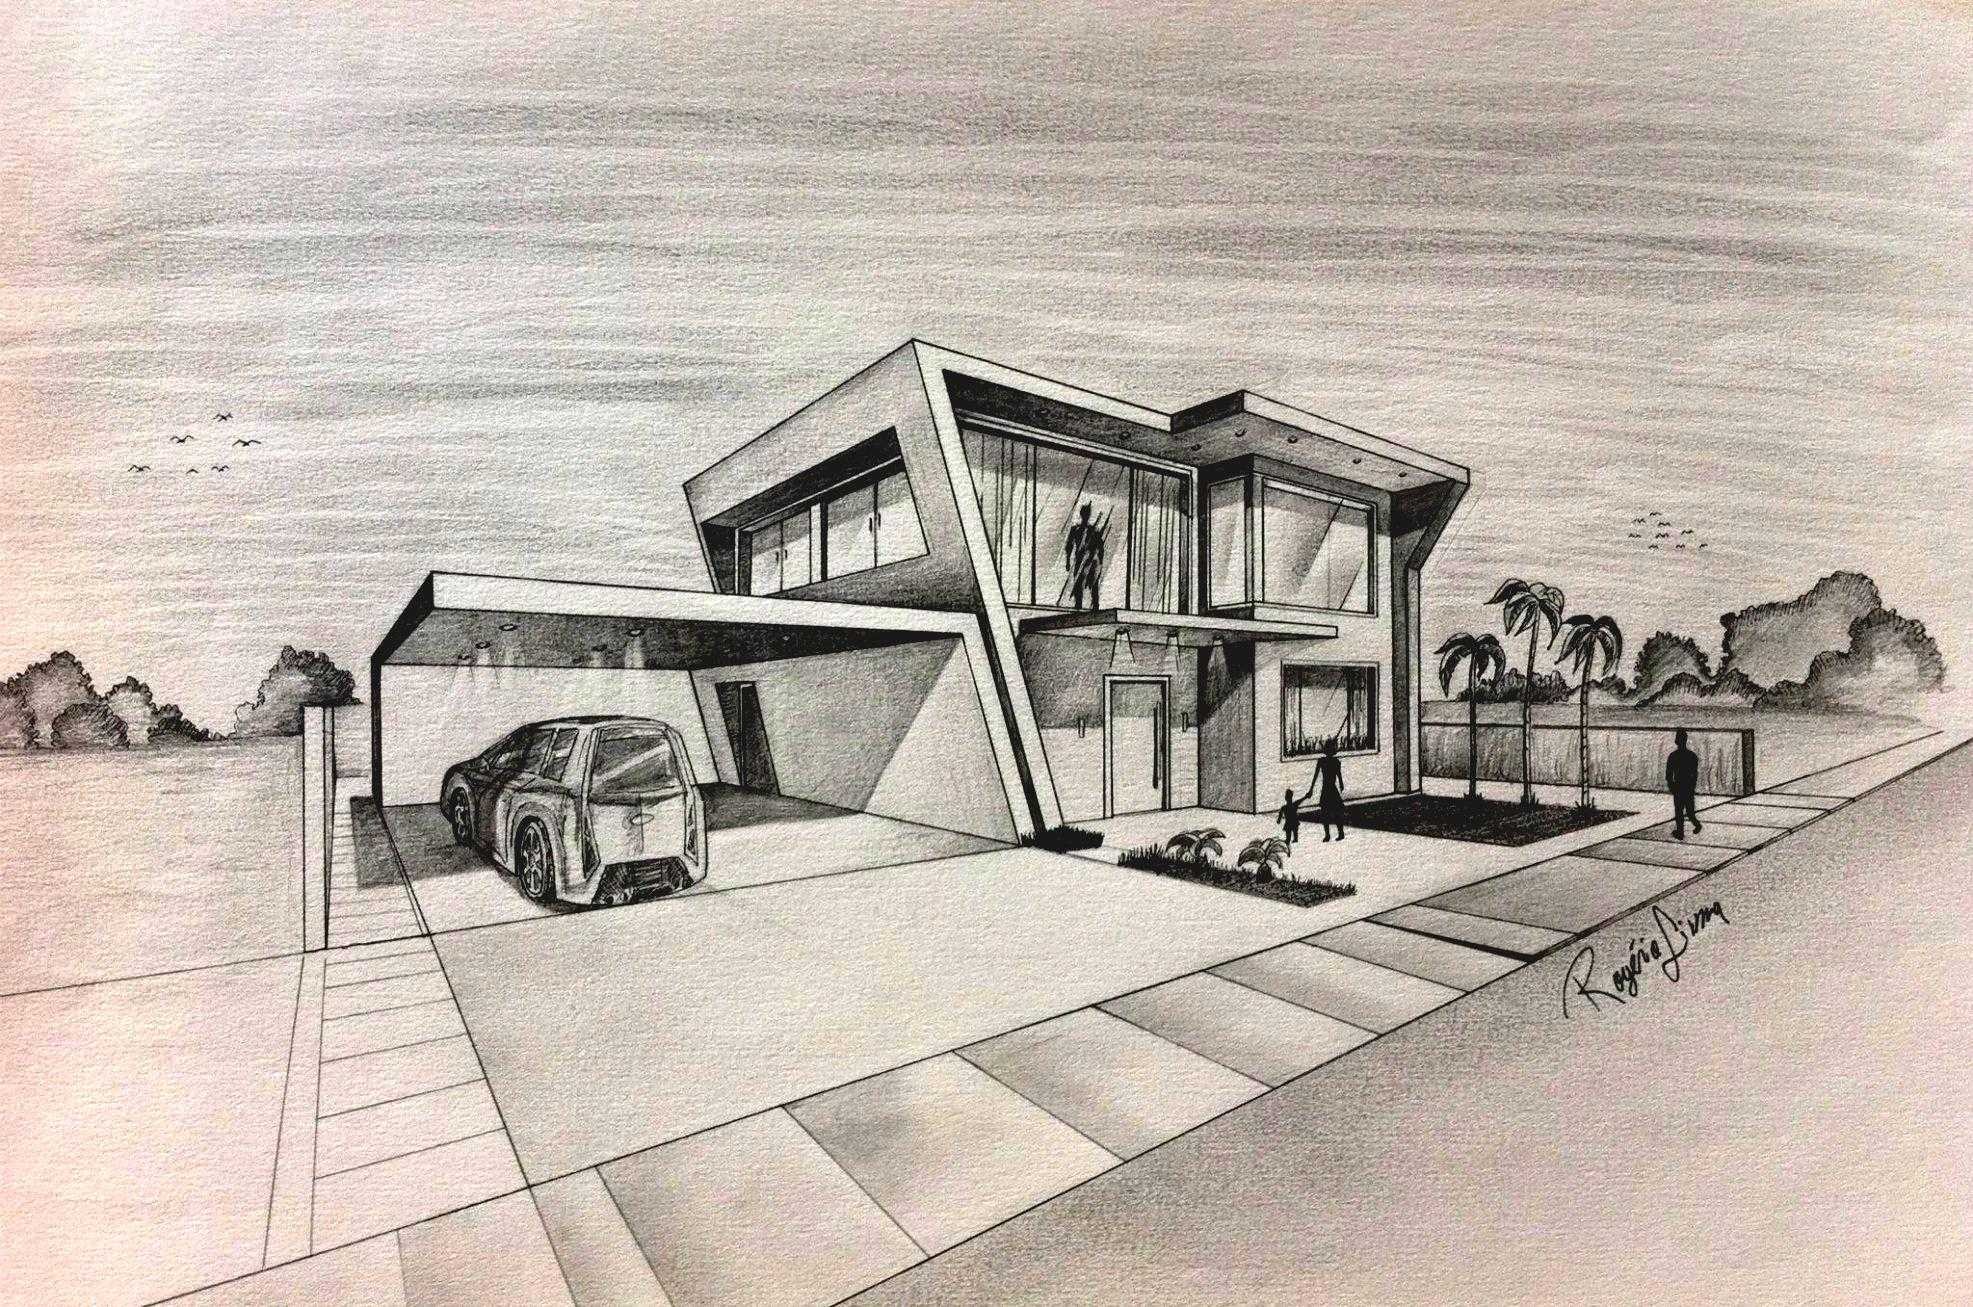 house sketch